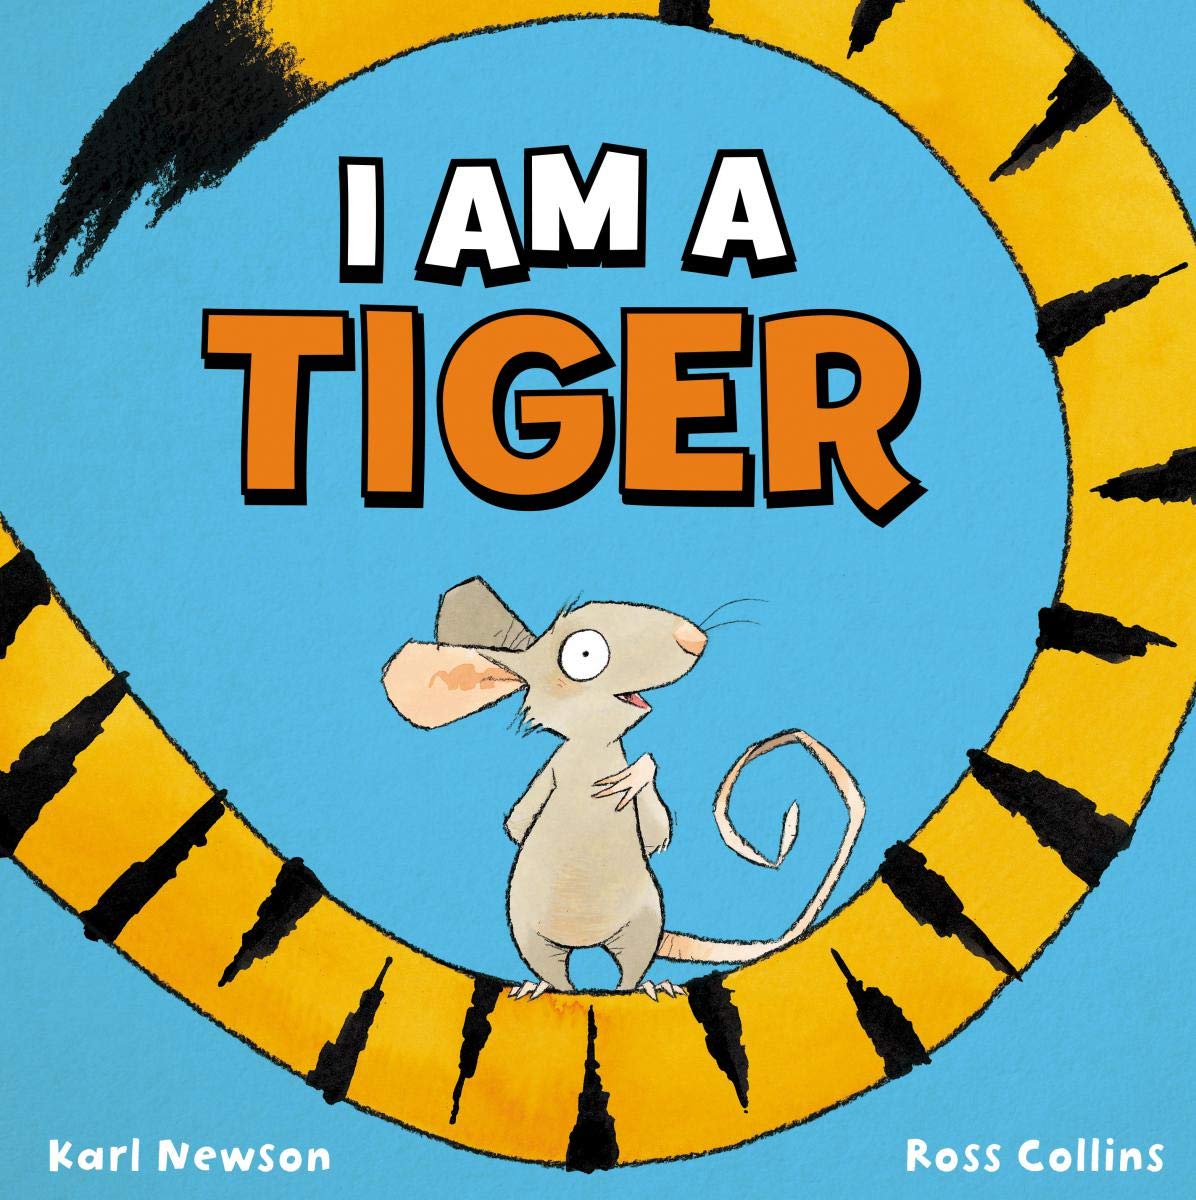 I am a Tiger by Karl Newson